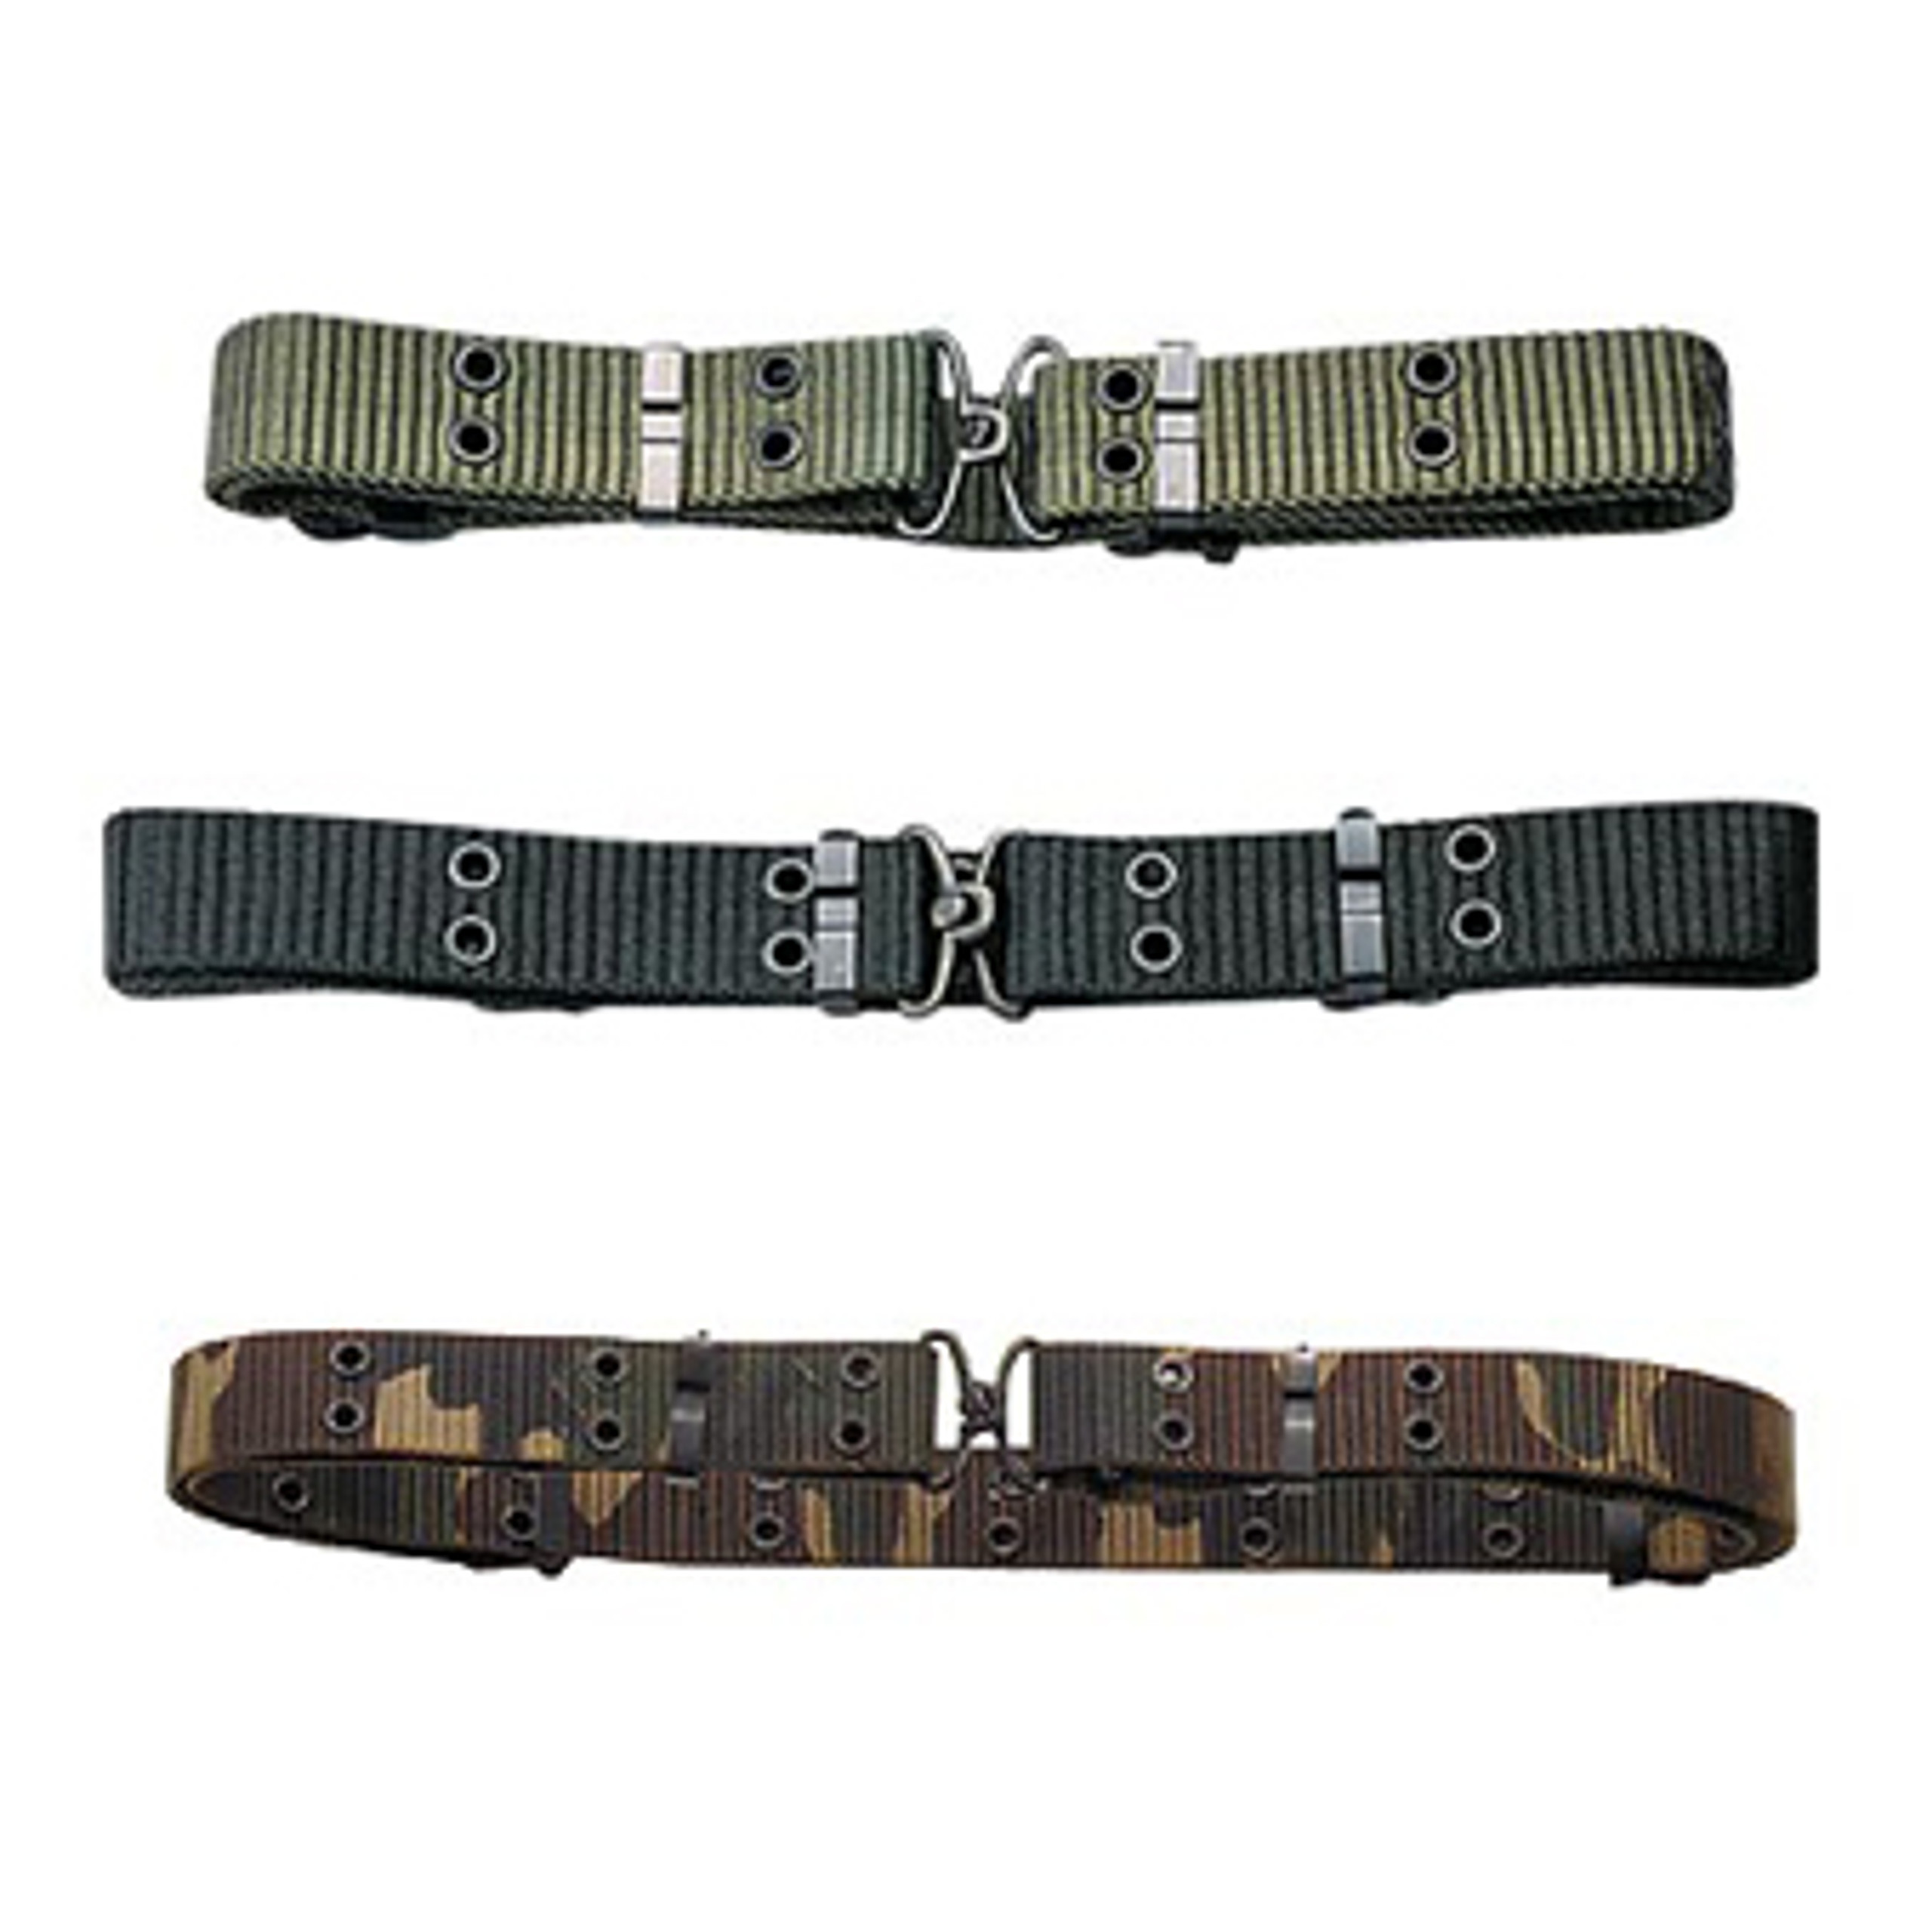 GI Pistol Belts/Utility Belts - Fatigues Army Navy